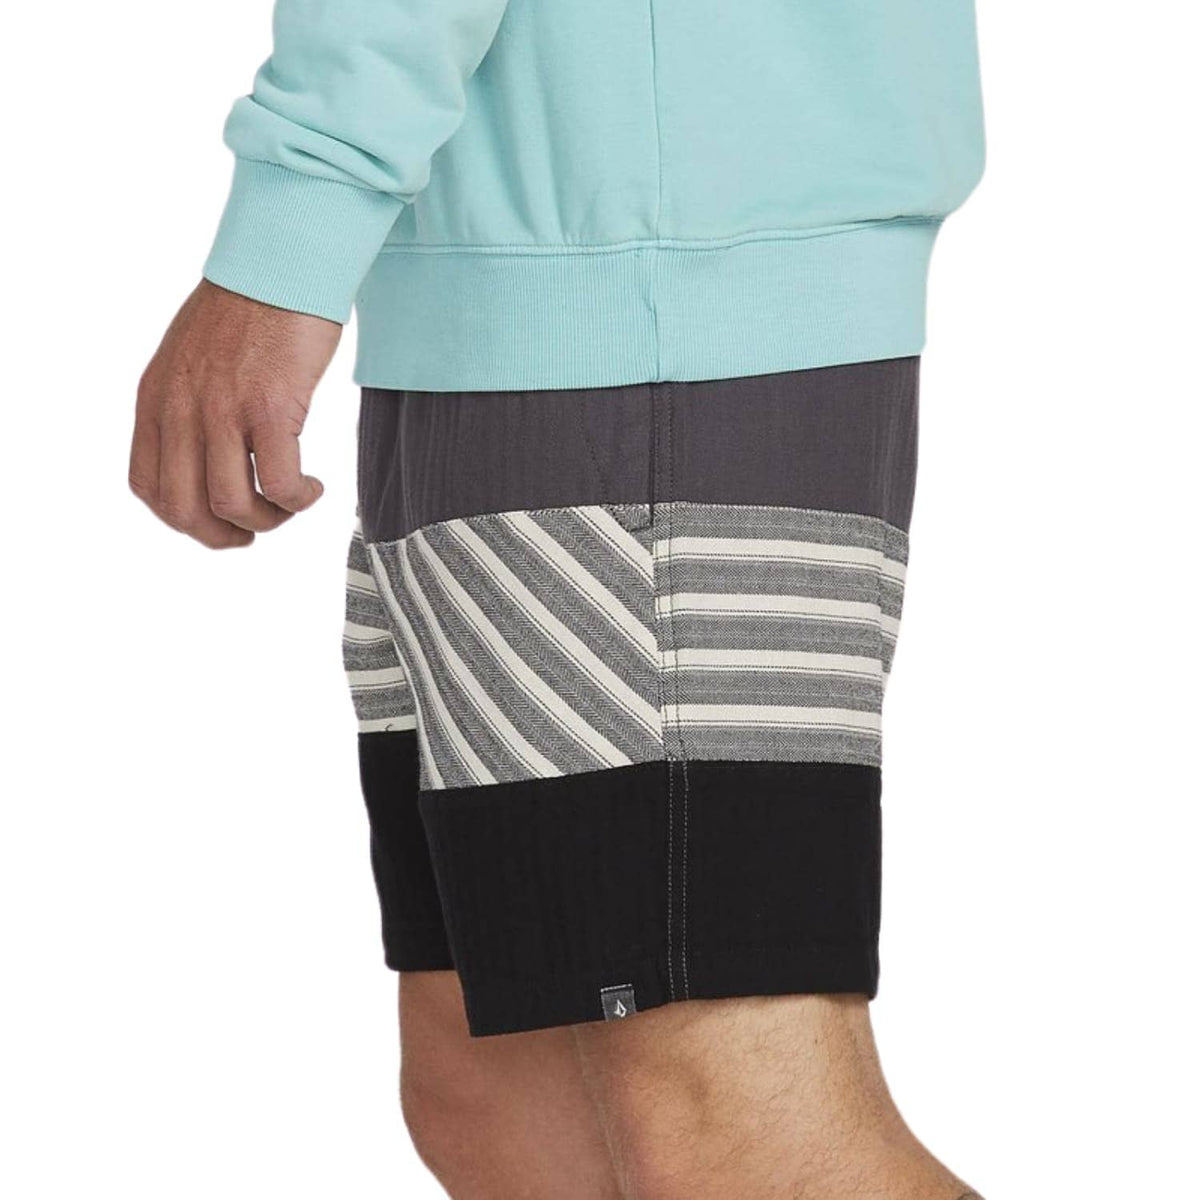 Volcom Forzee Shorts - Dark Charcoal